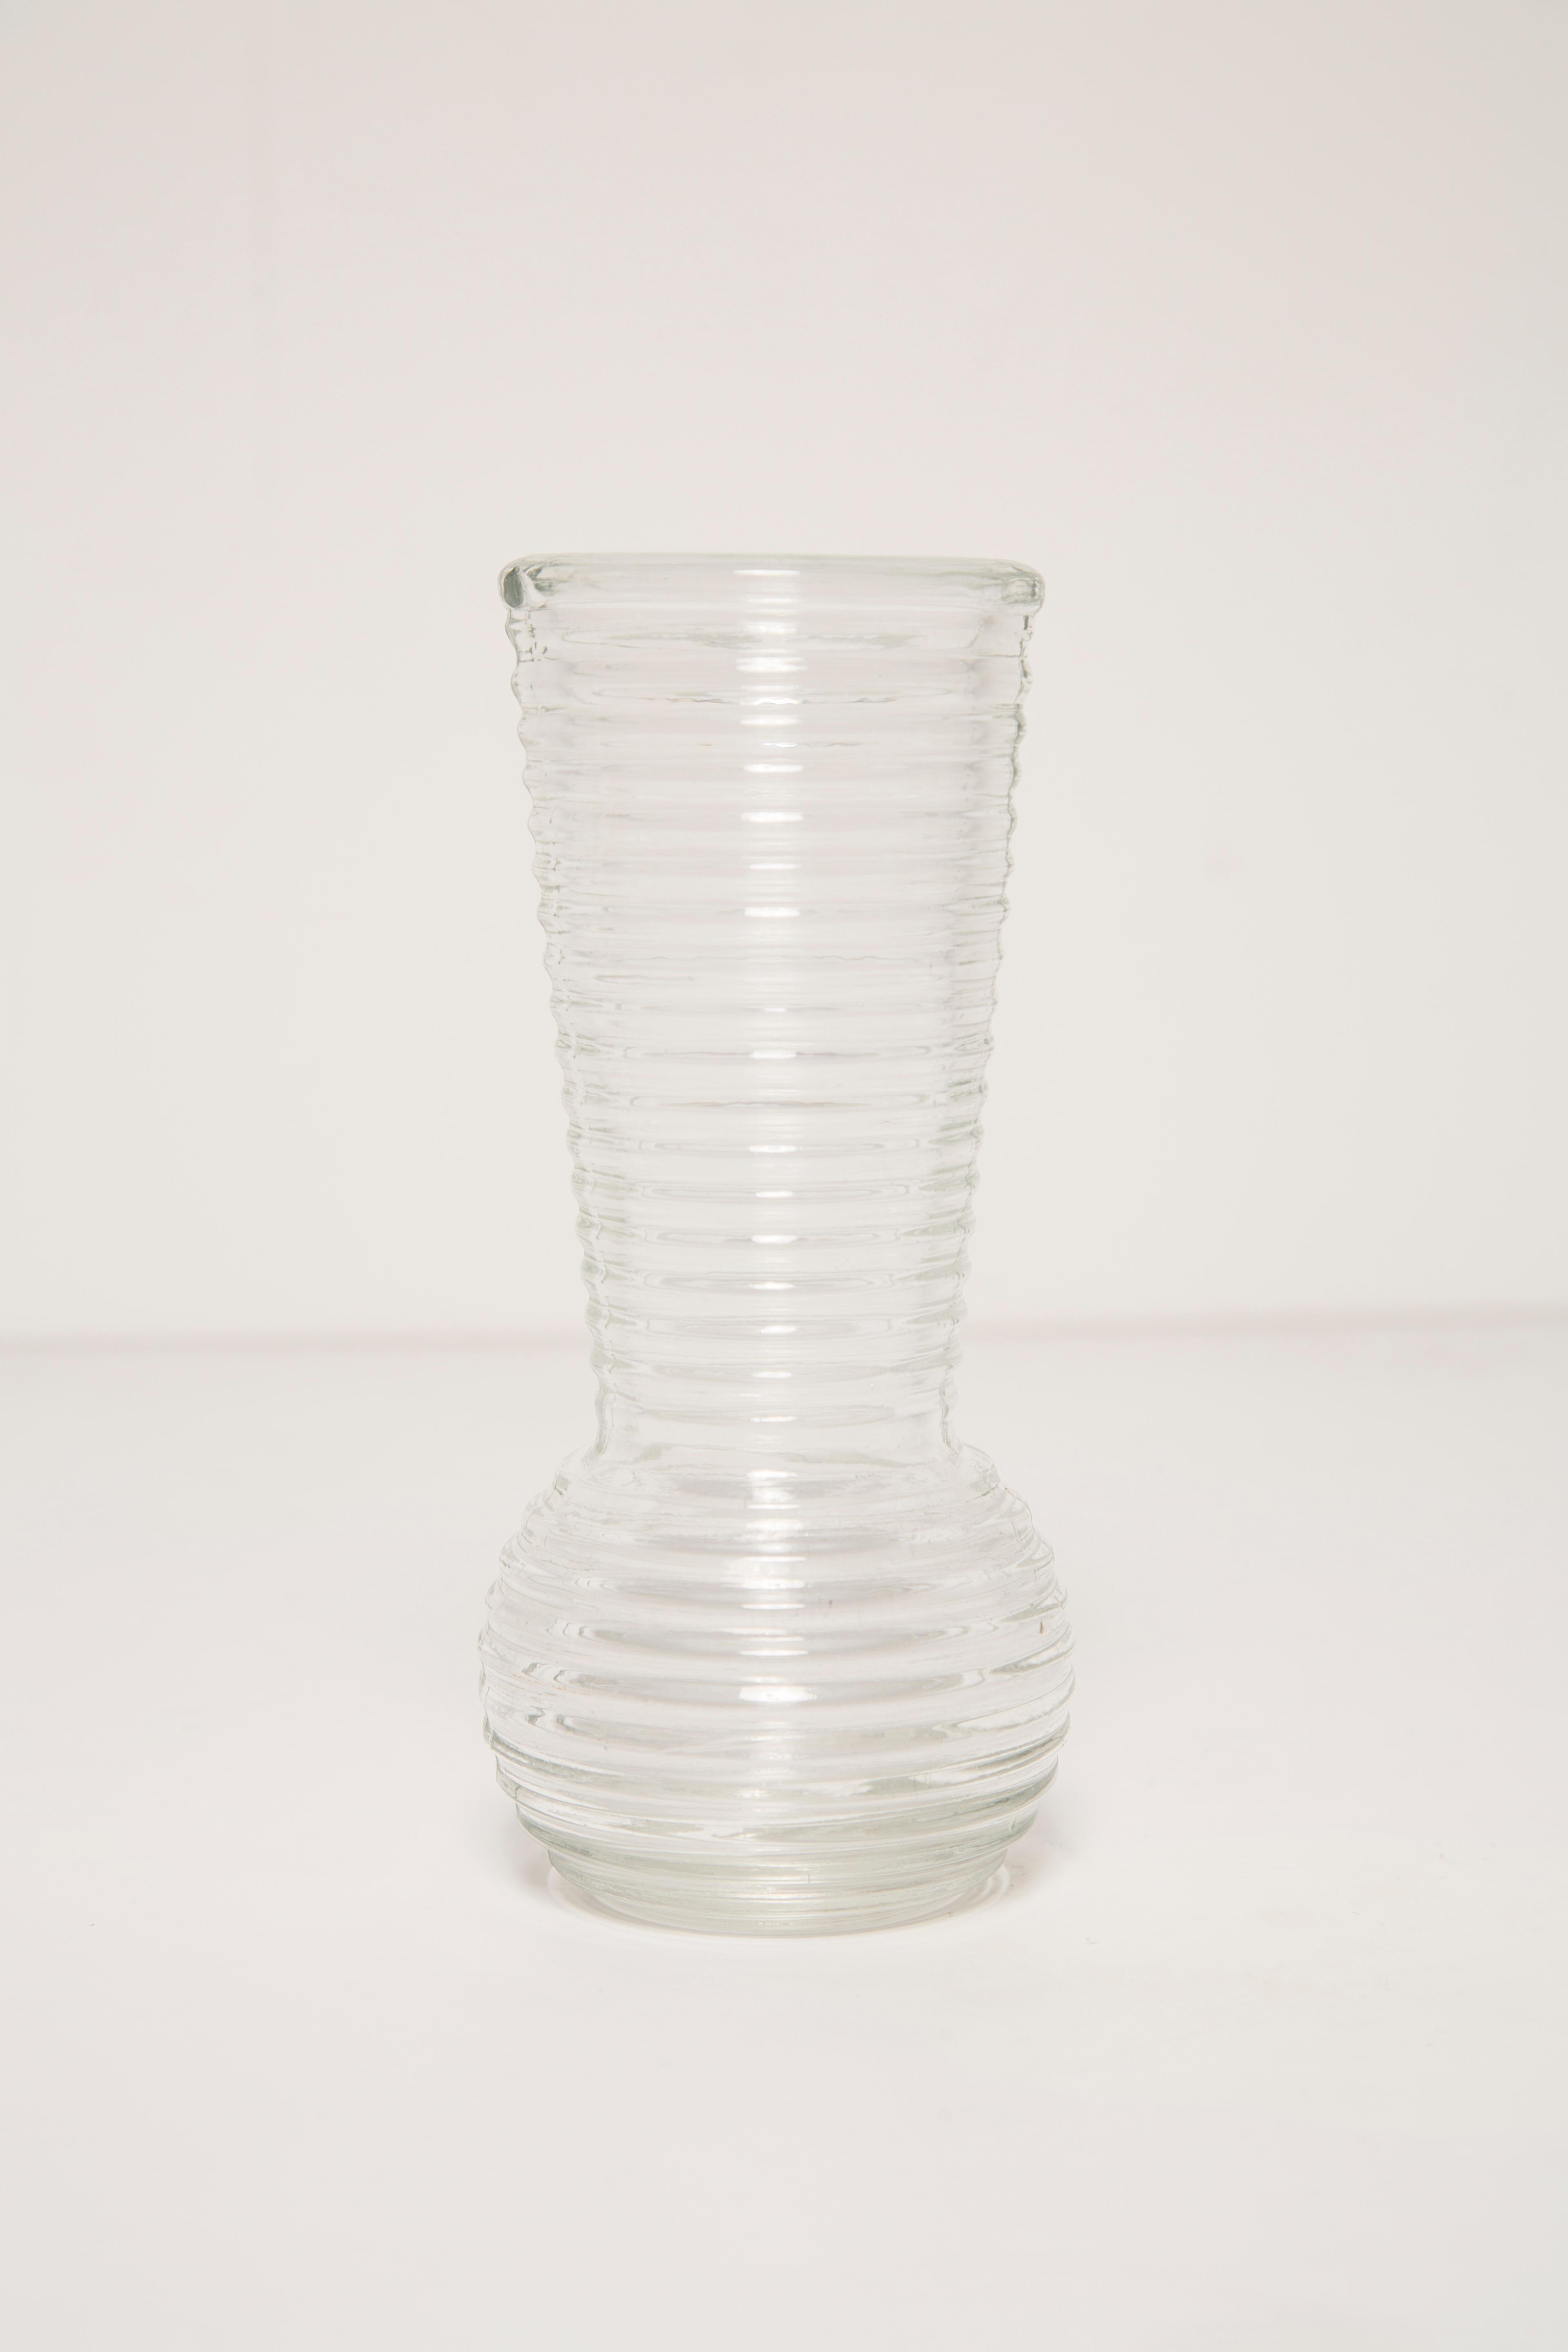 Midcentury Vintage Transparent Small Vase, Europe, 1960s For Sale 3